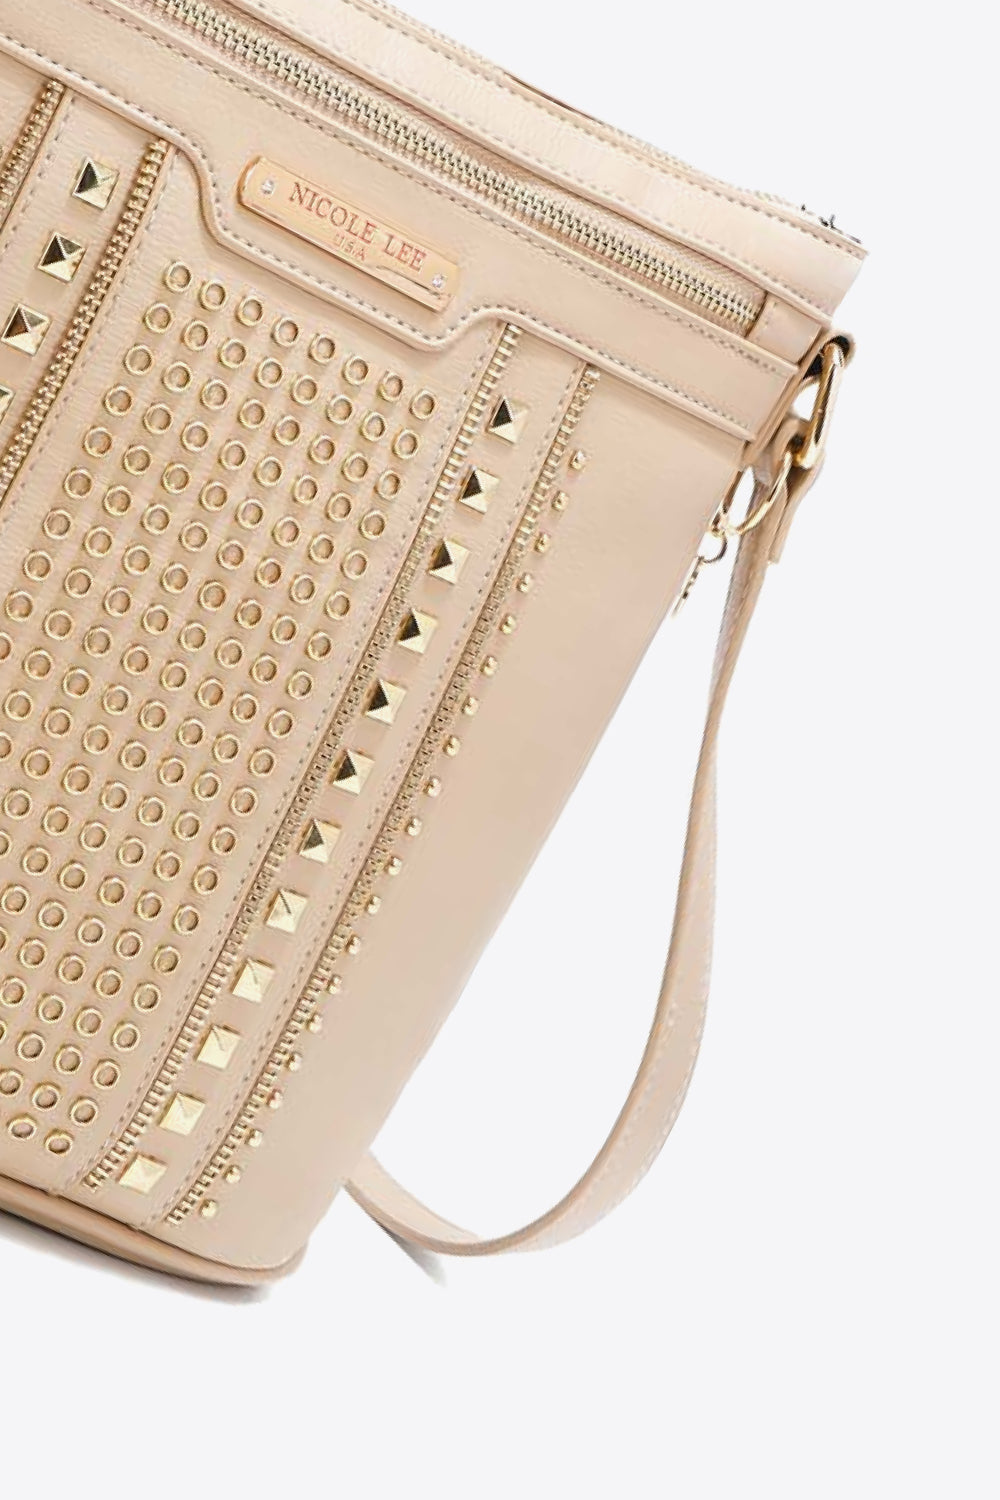 Trendy Love Handbag from Nicole Lee